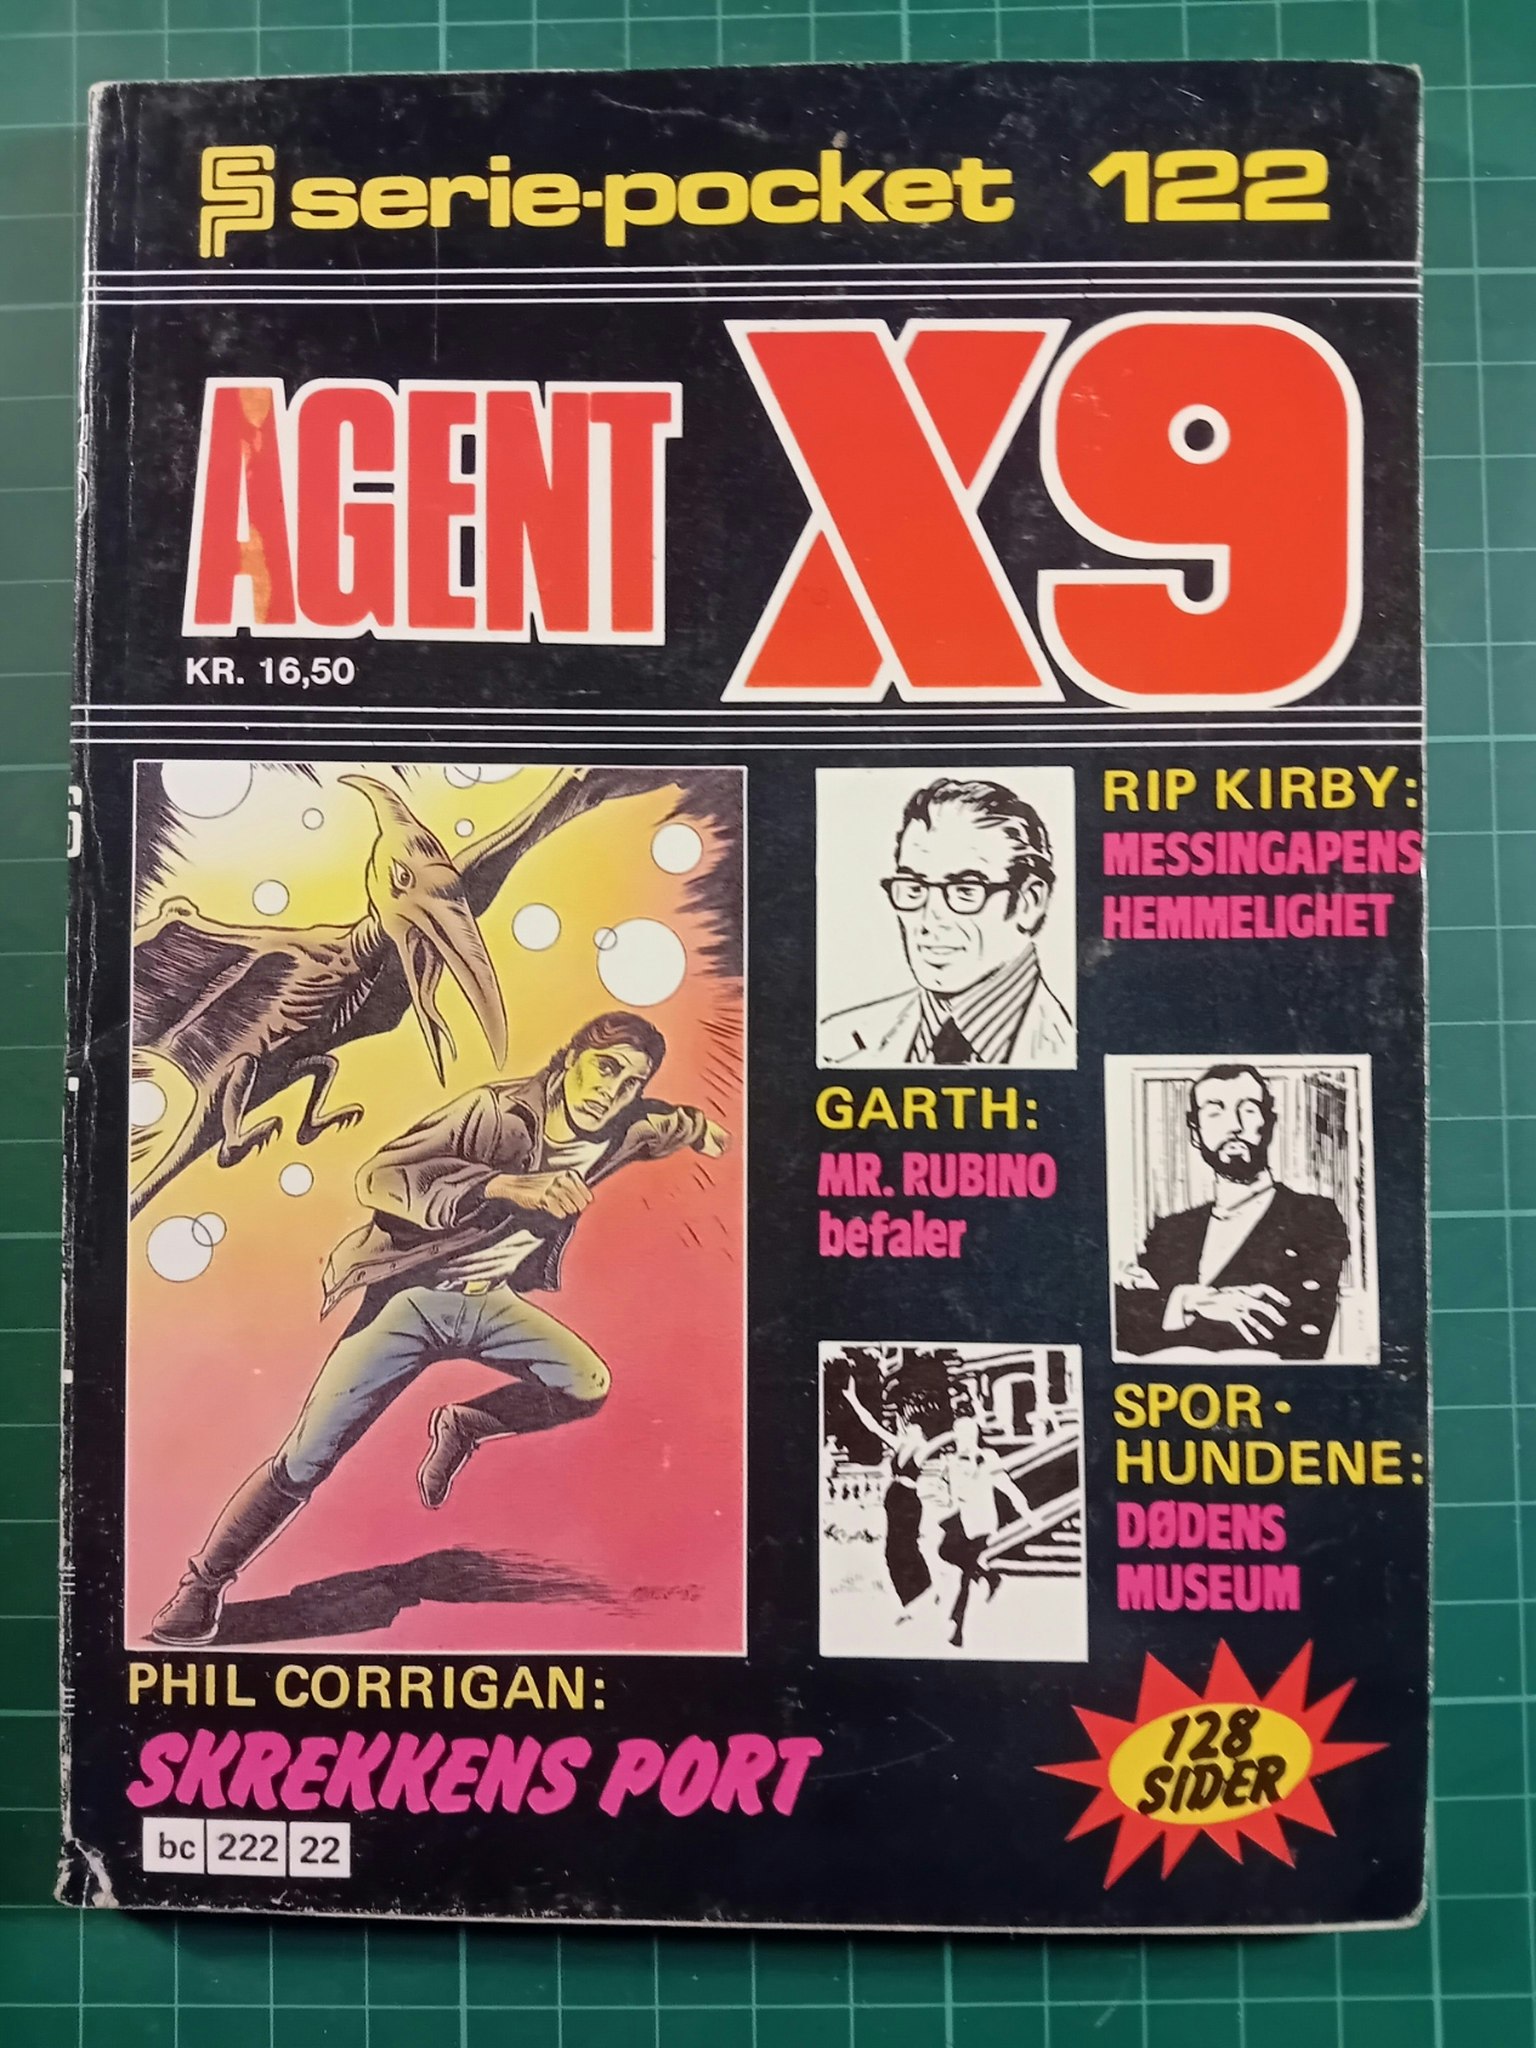 Serie-pocket 122 : Agent X9